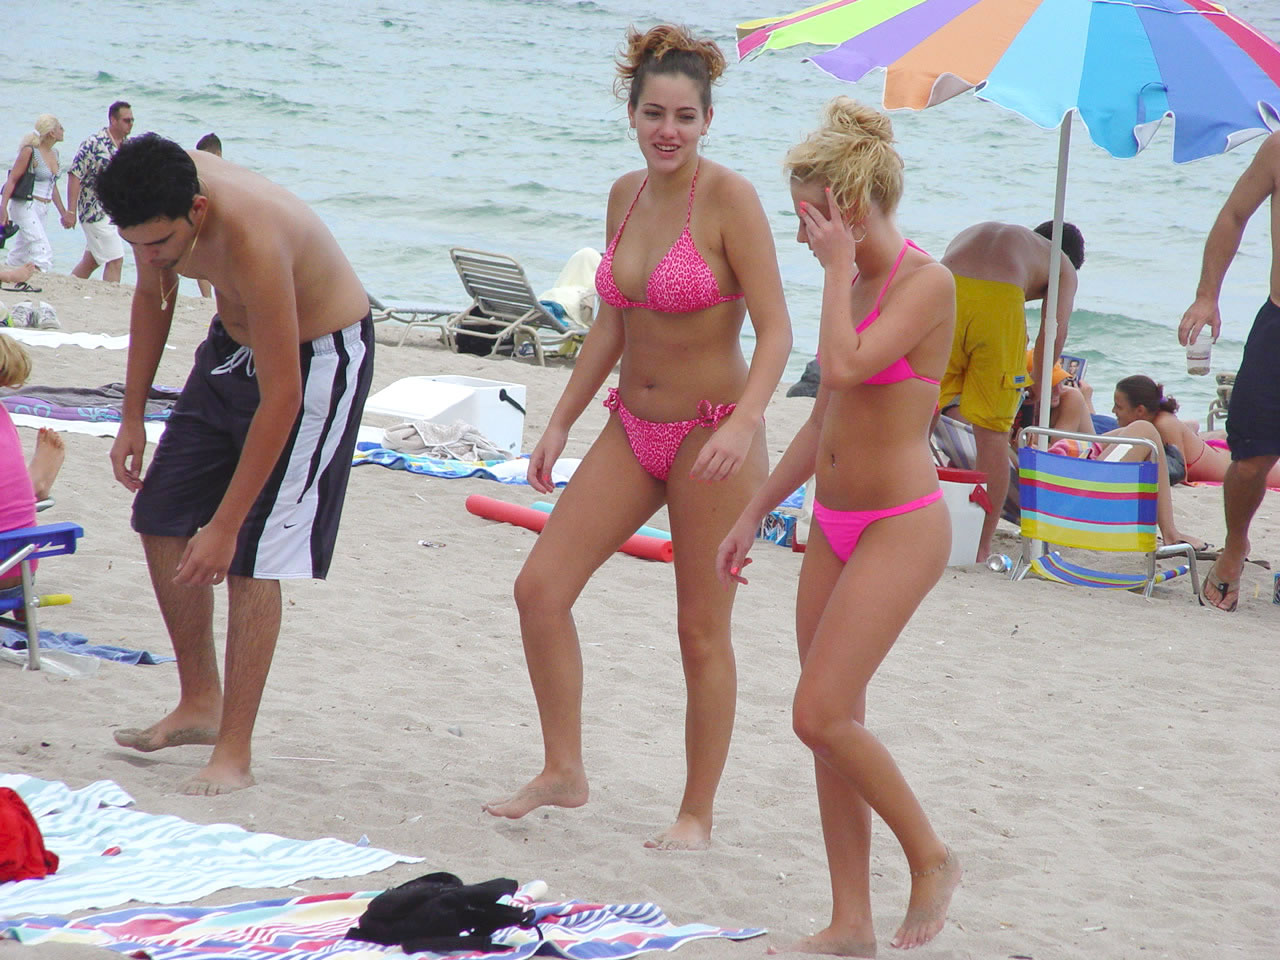 Pink bikini babes walking on hot beach sands